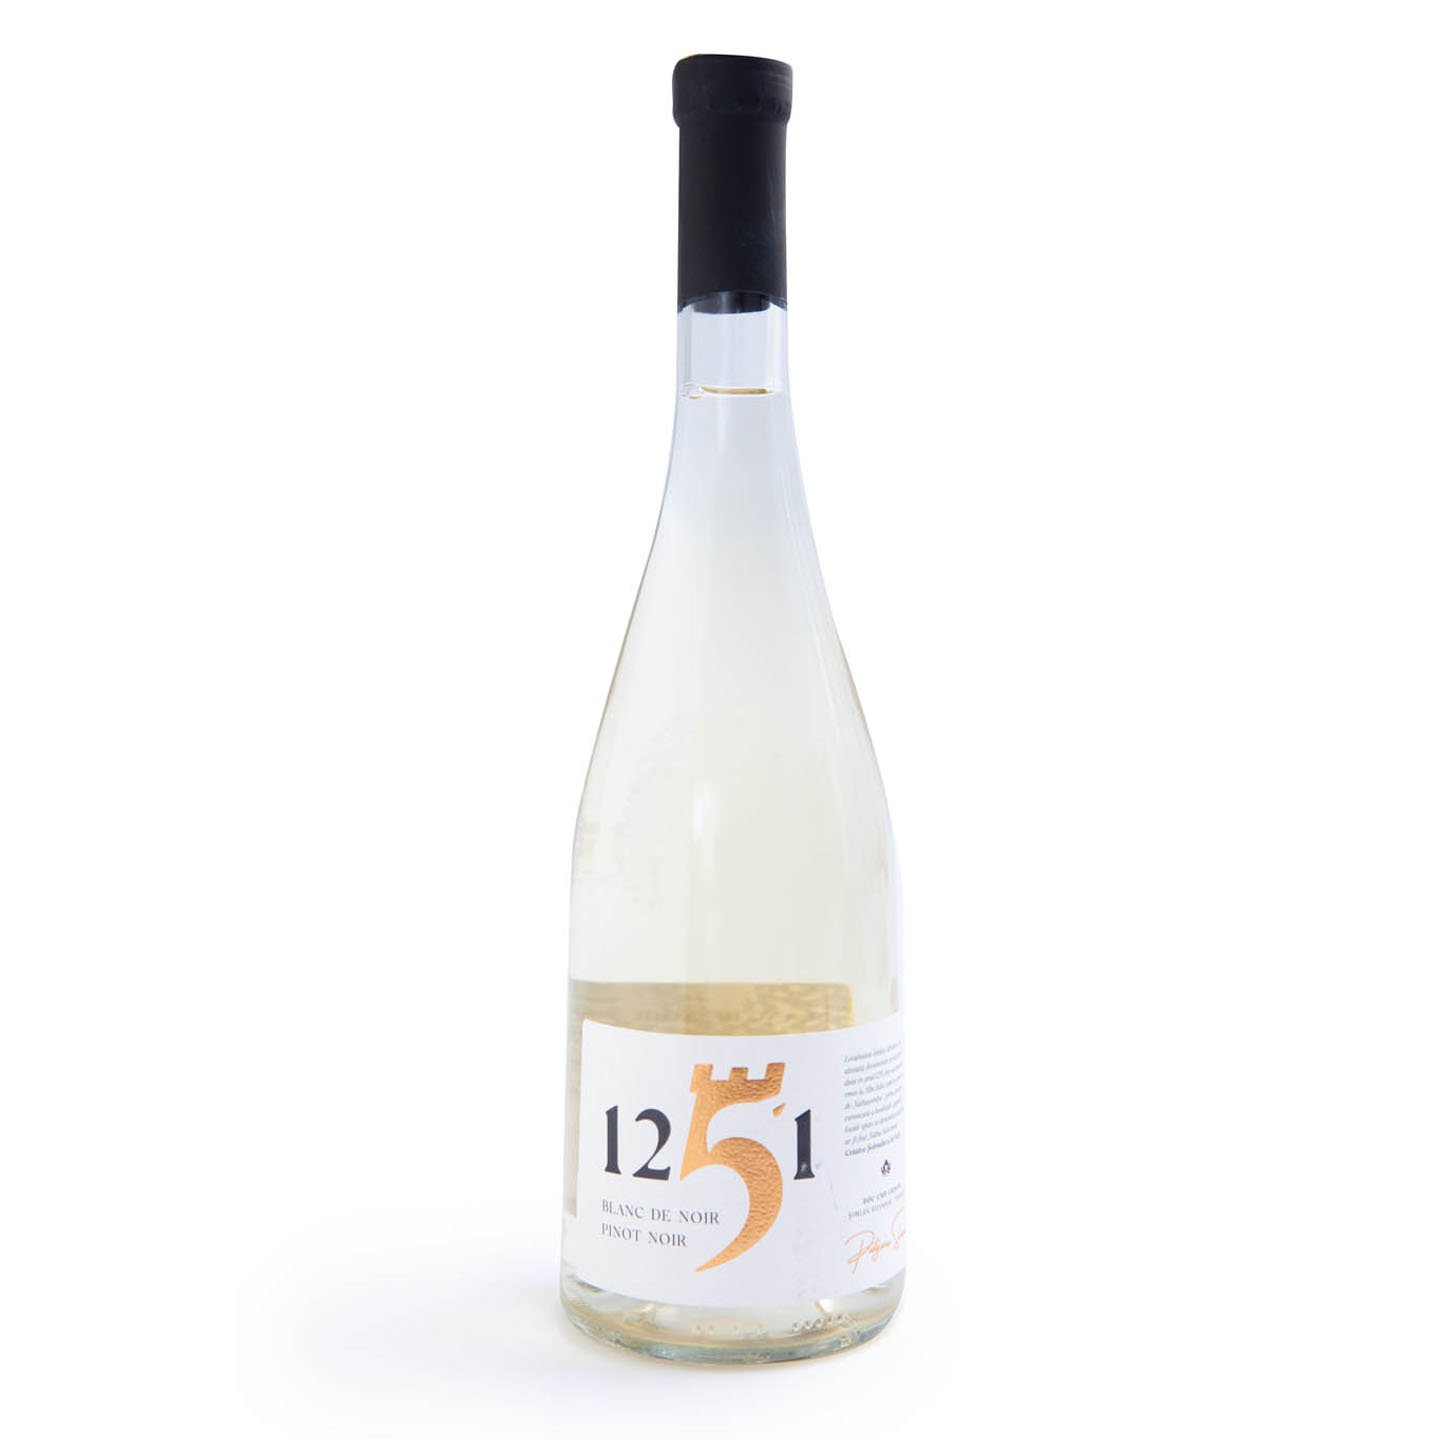 Vin Blanc de Noir Podgoria Silvania 1251 0.75L